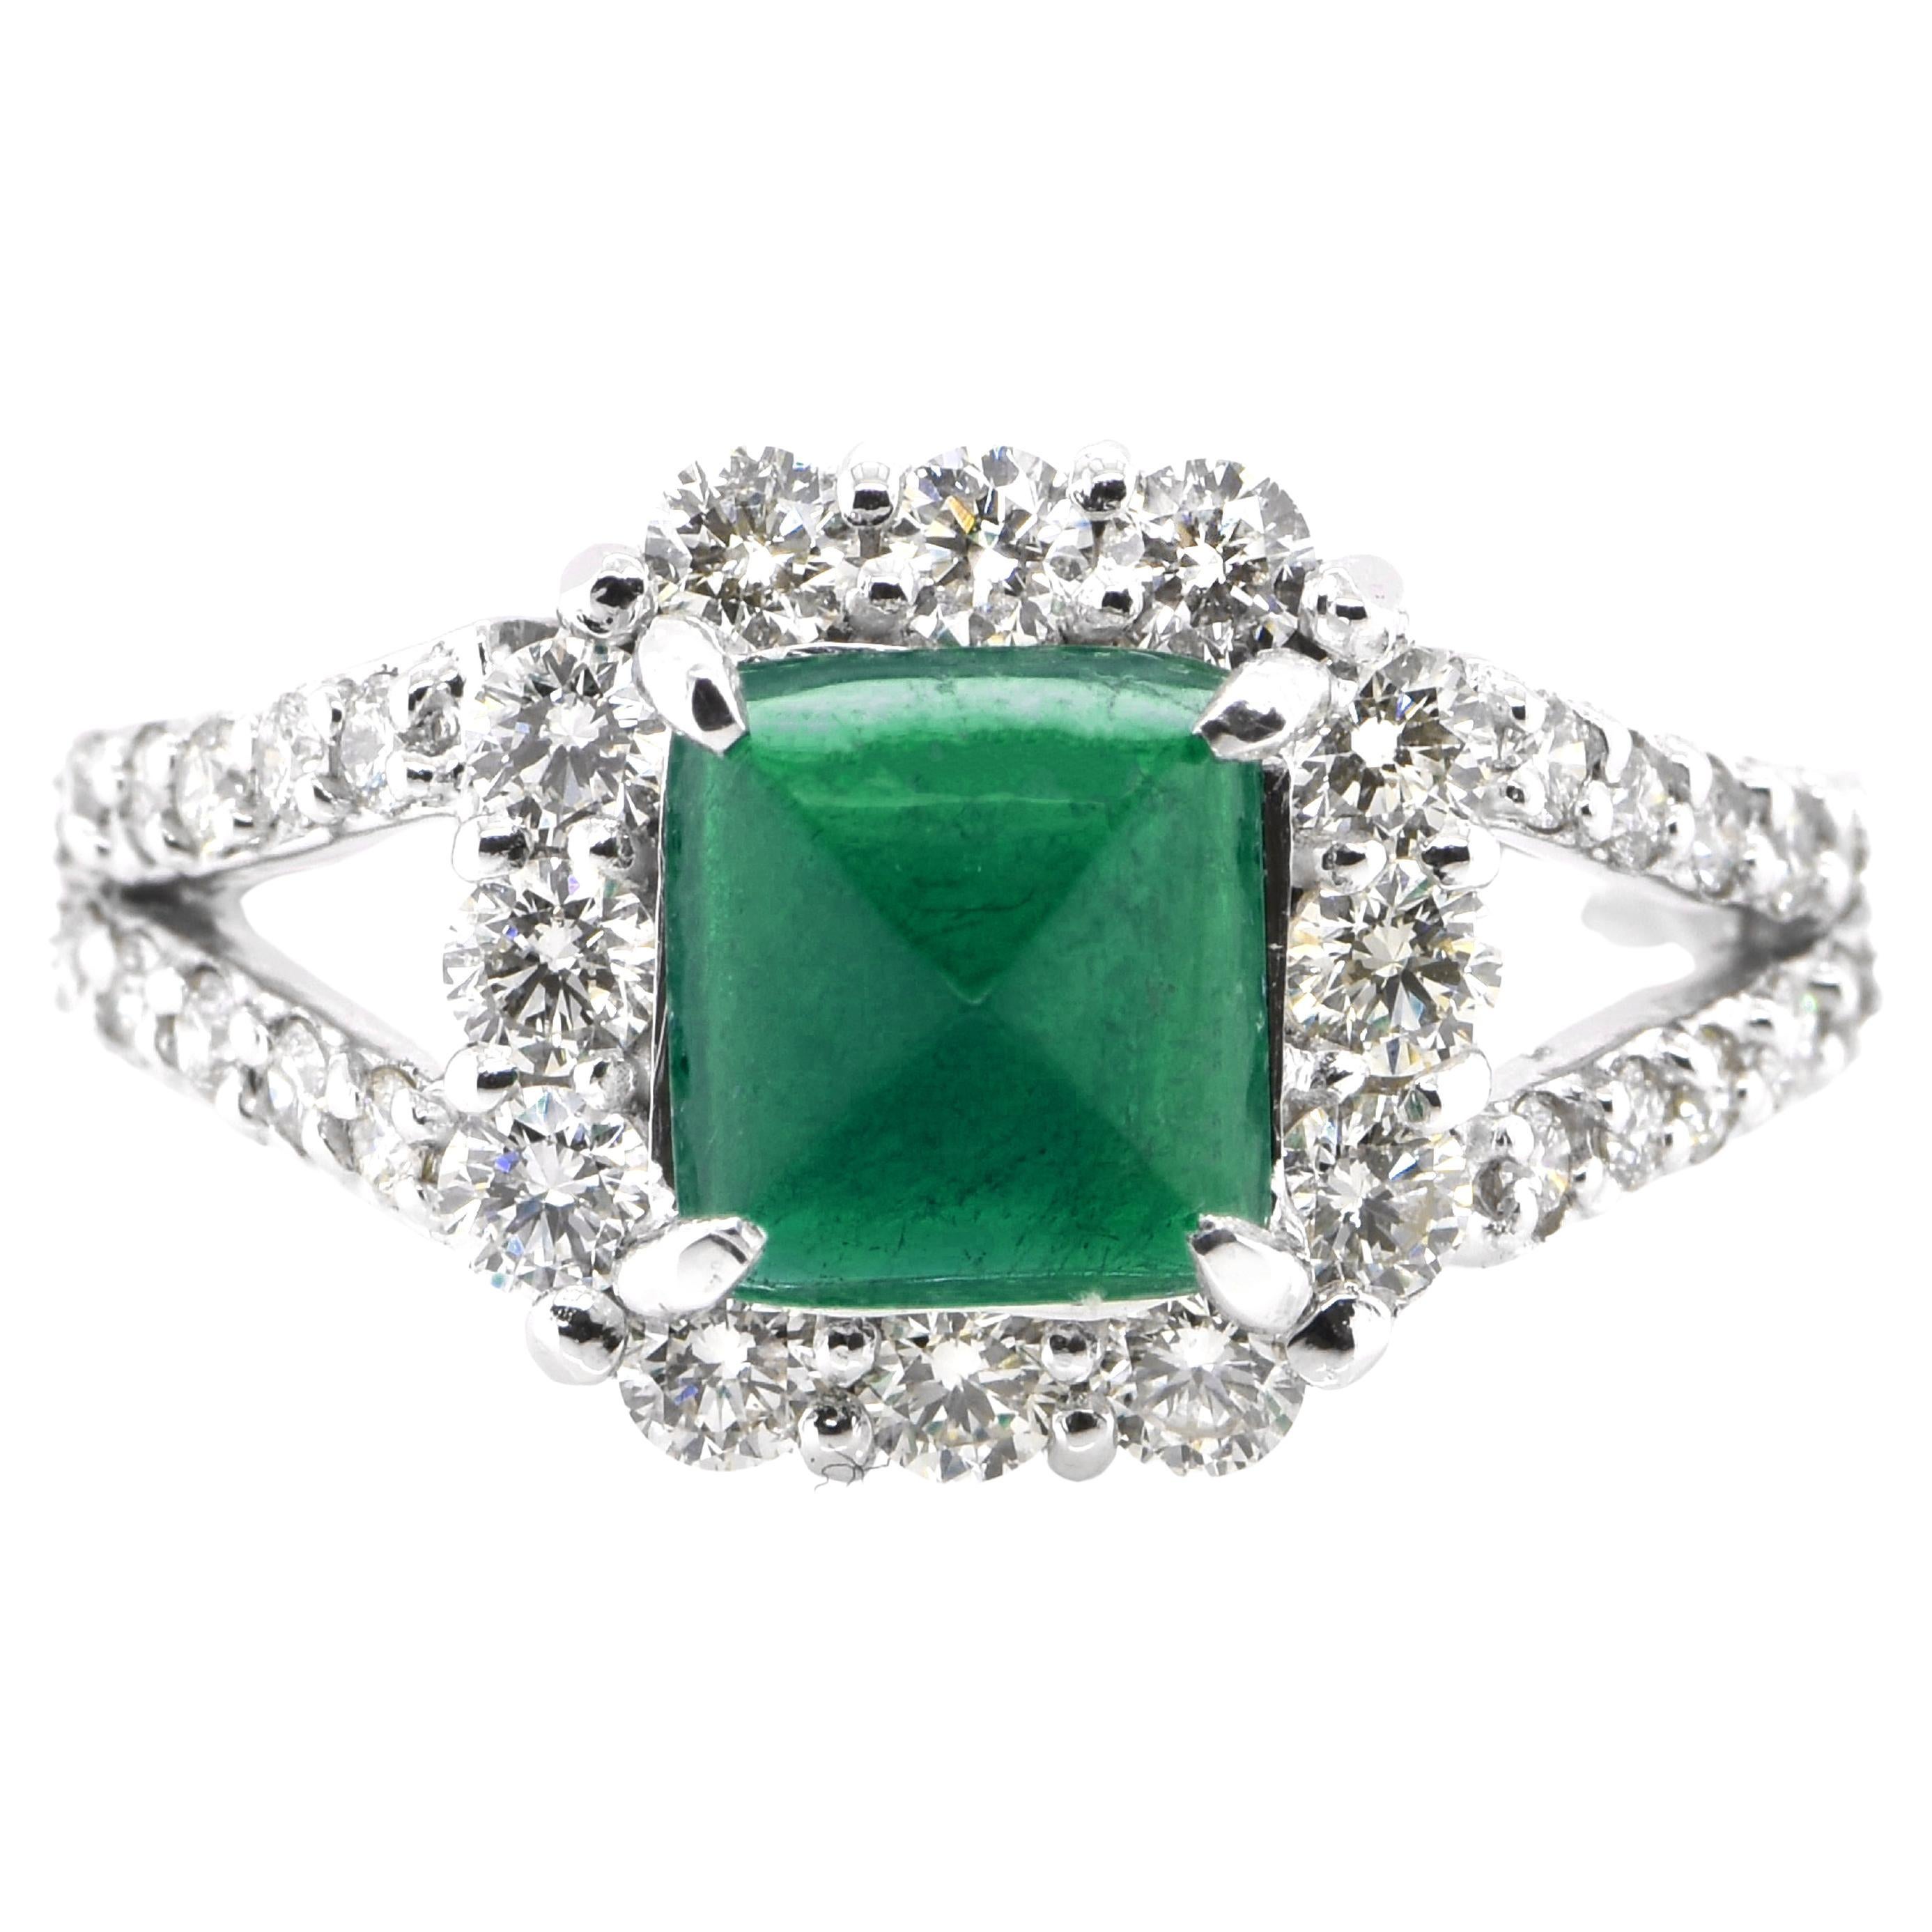 1.35 Carat Natural Emerald Sugarloaf Cabochon and Diamond Ring Set in Platinum